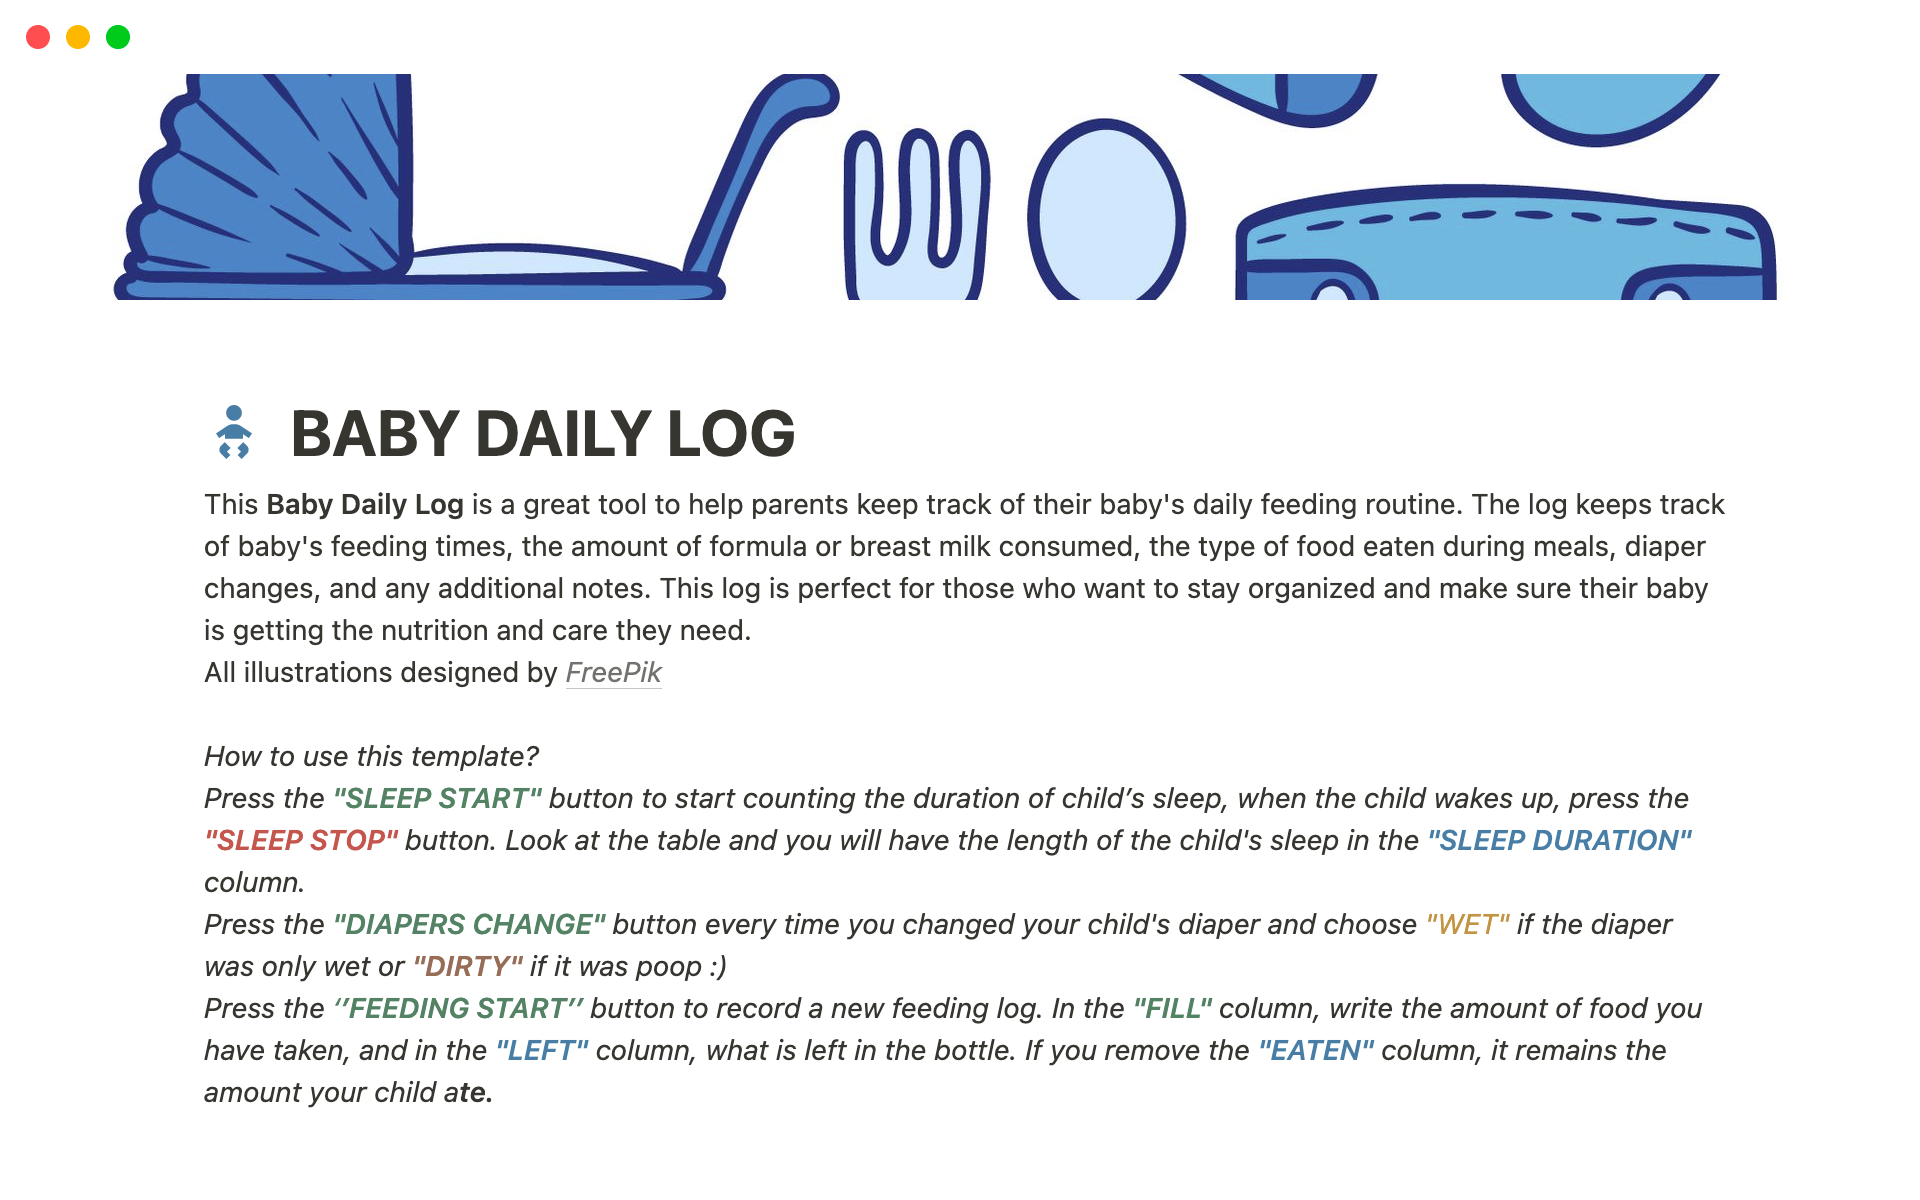 Aperçu du modèle de Baby Daily Log